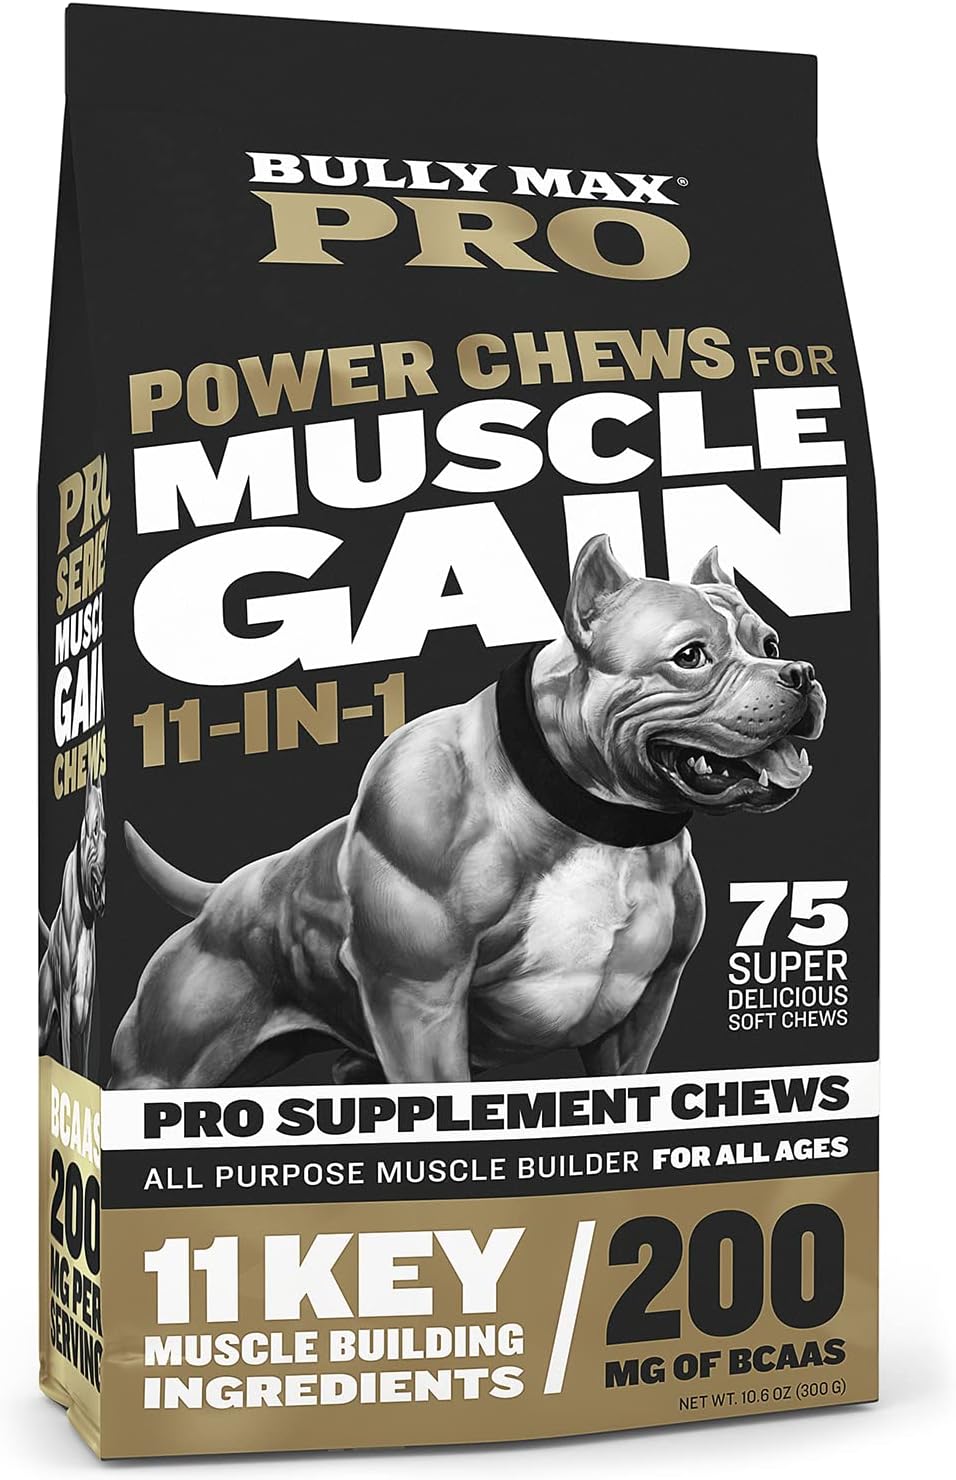 Bully Max Muscle Gain Power Chews